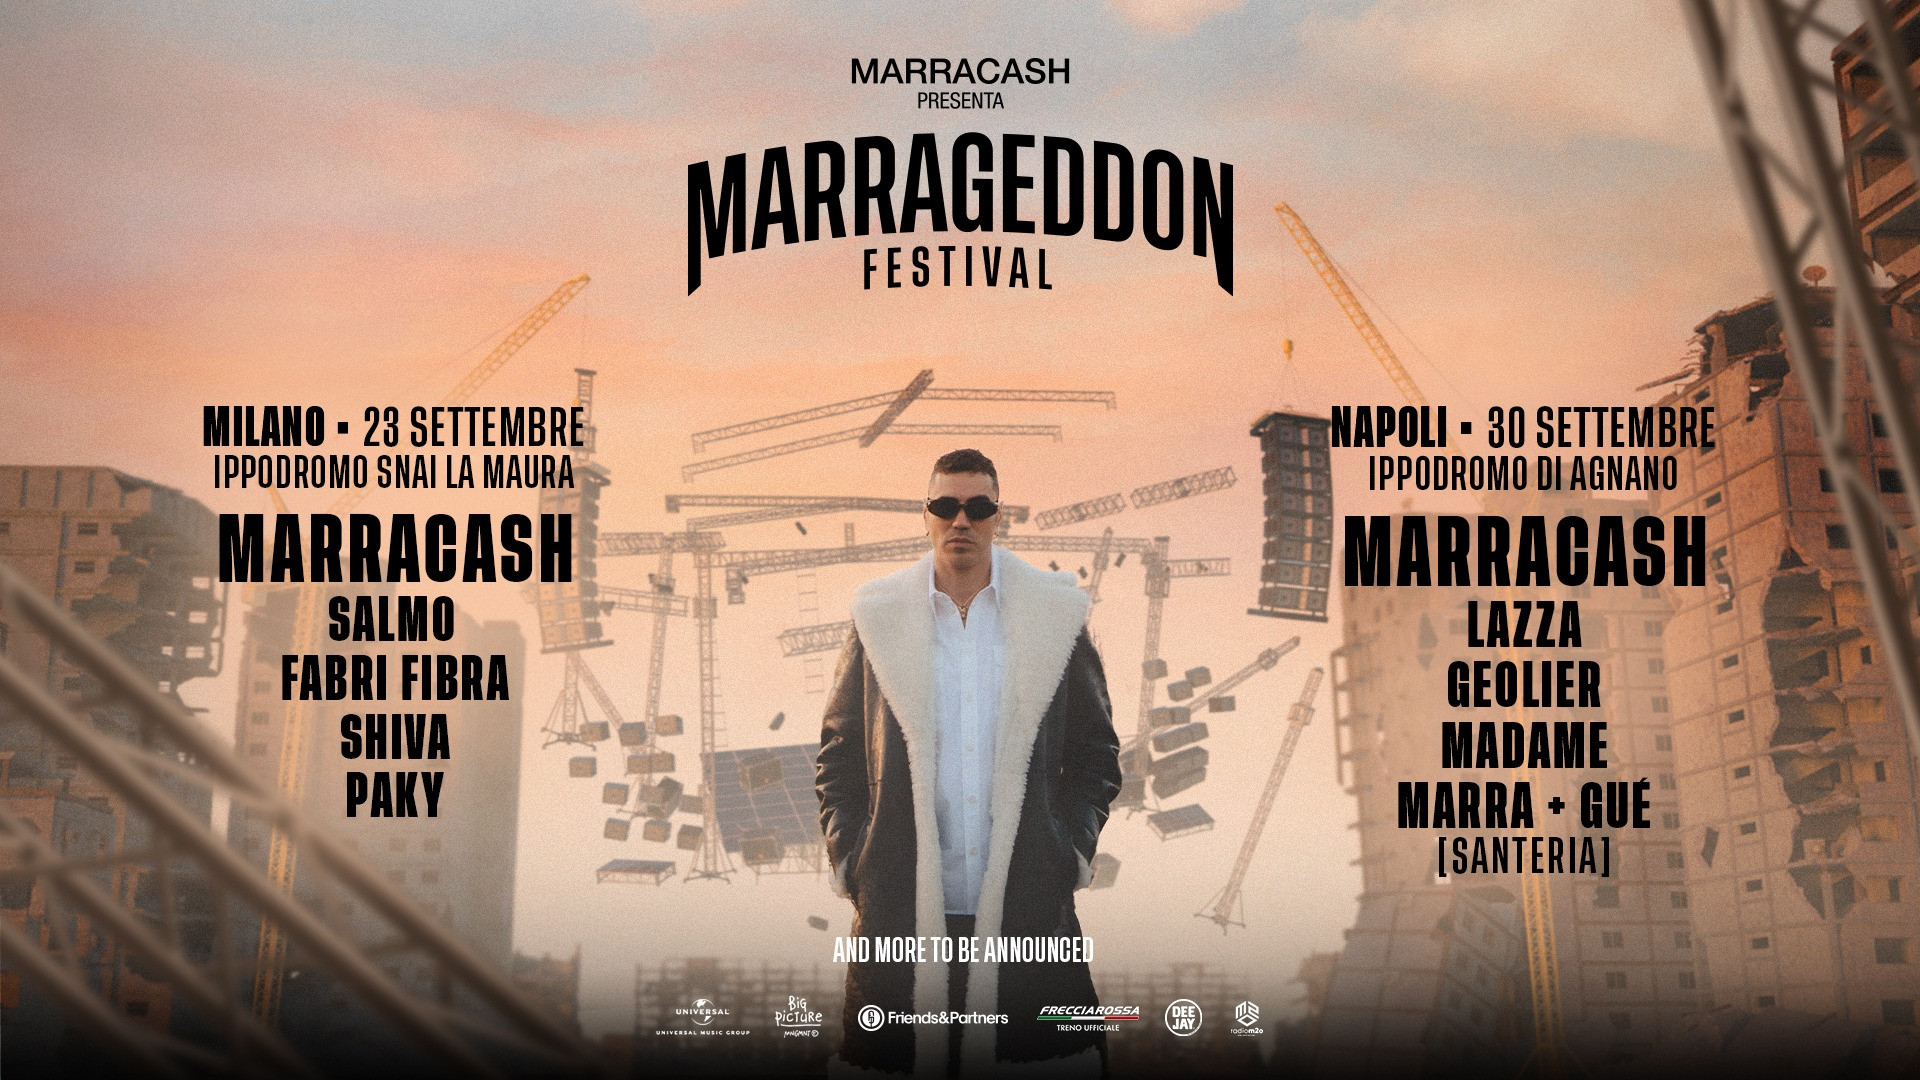 Marracash Marrageddon - Lineup